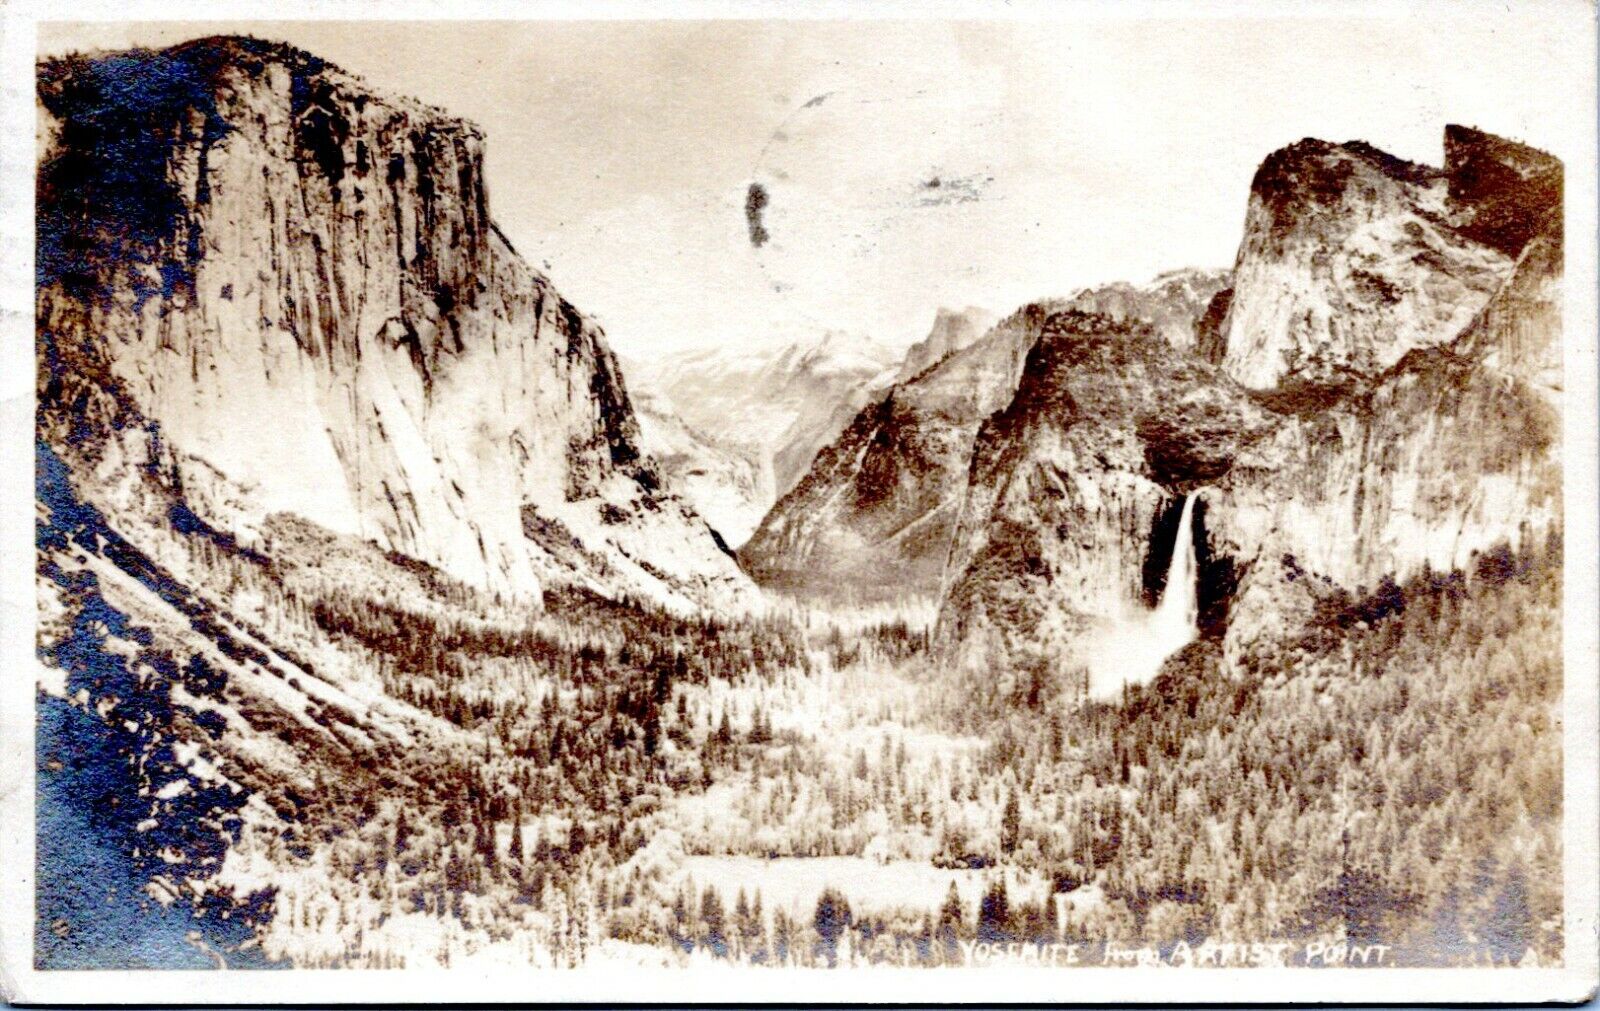 Yosemite California RPPC Real Photo Postcard 1930 Yosemite from Artist Point NZ